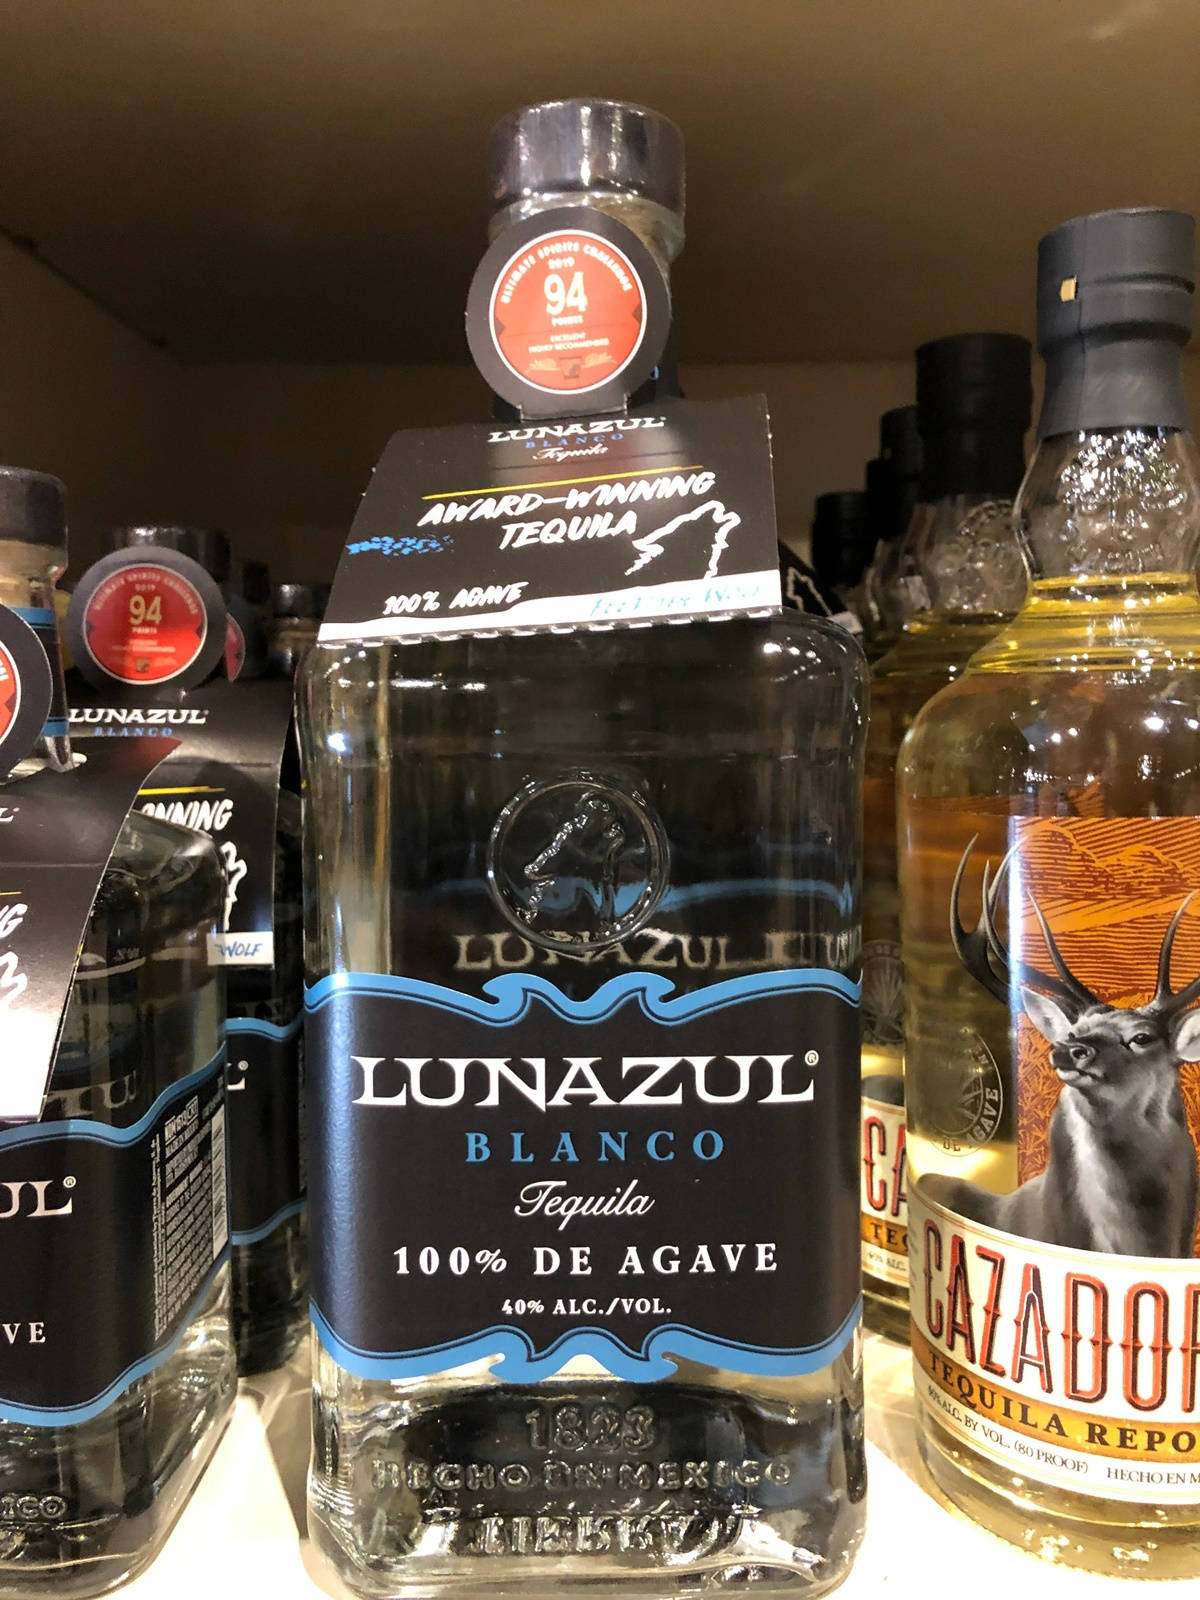 Lunazul Blanco Award-Winning Tequila Wallpaper